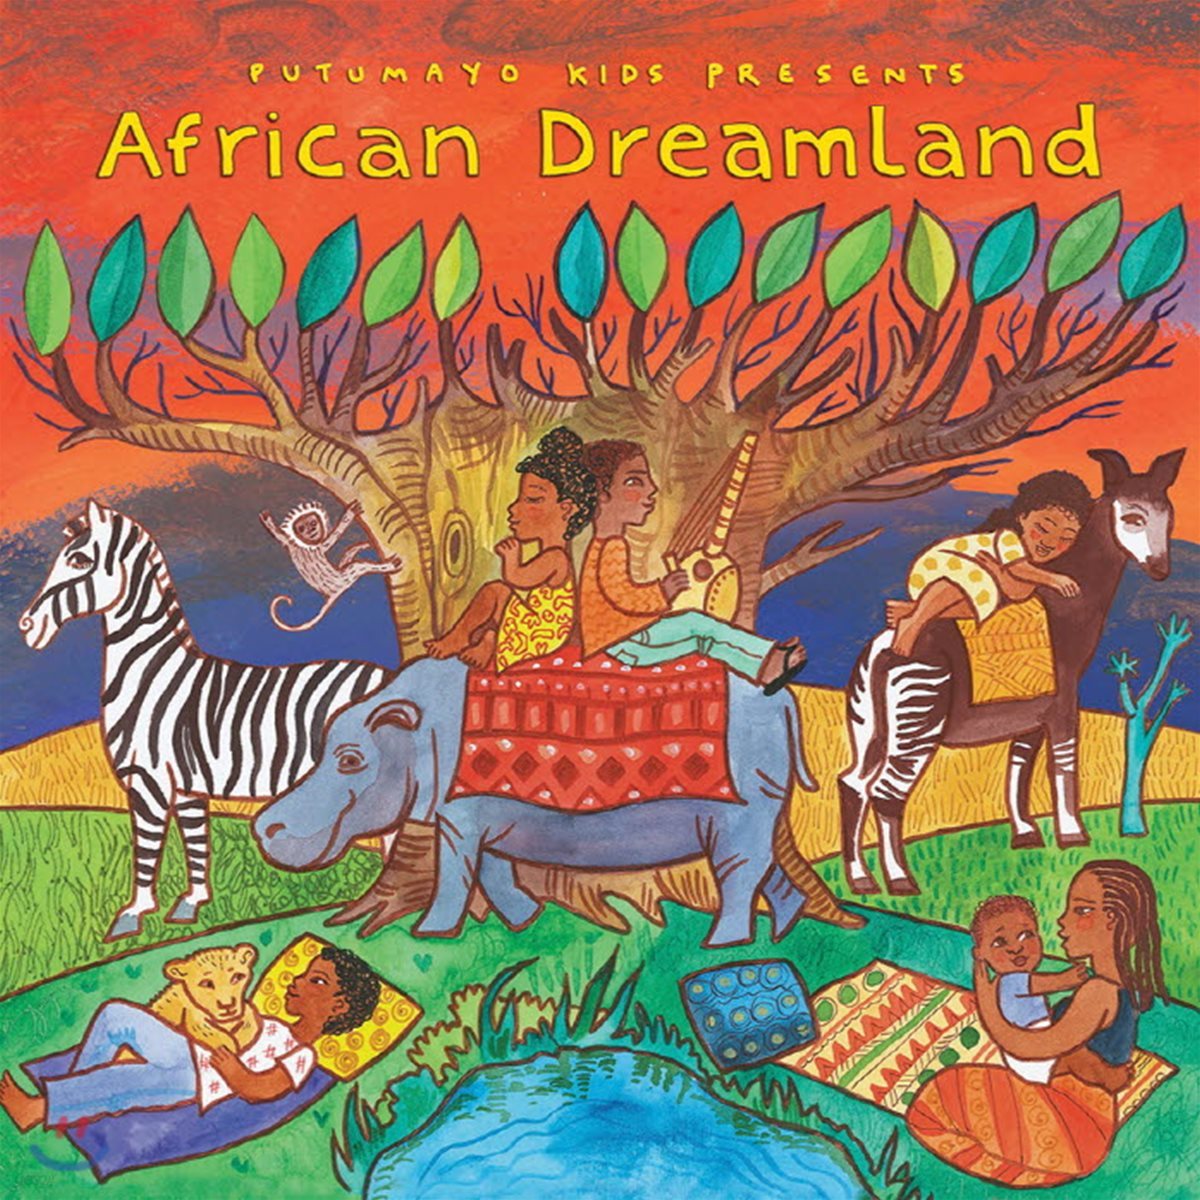 Putumayo Kids presents African Dreamland (푸투마요 키즈 프레젠트 아프리칸 드림랜드)